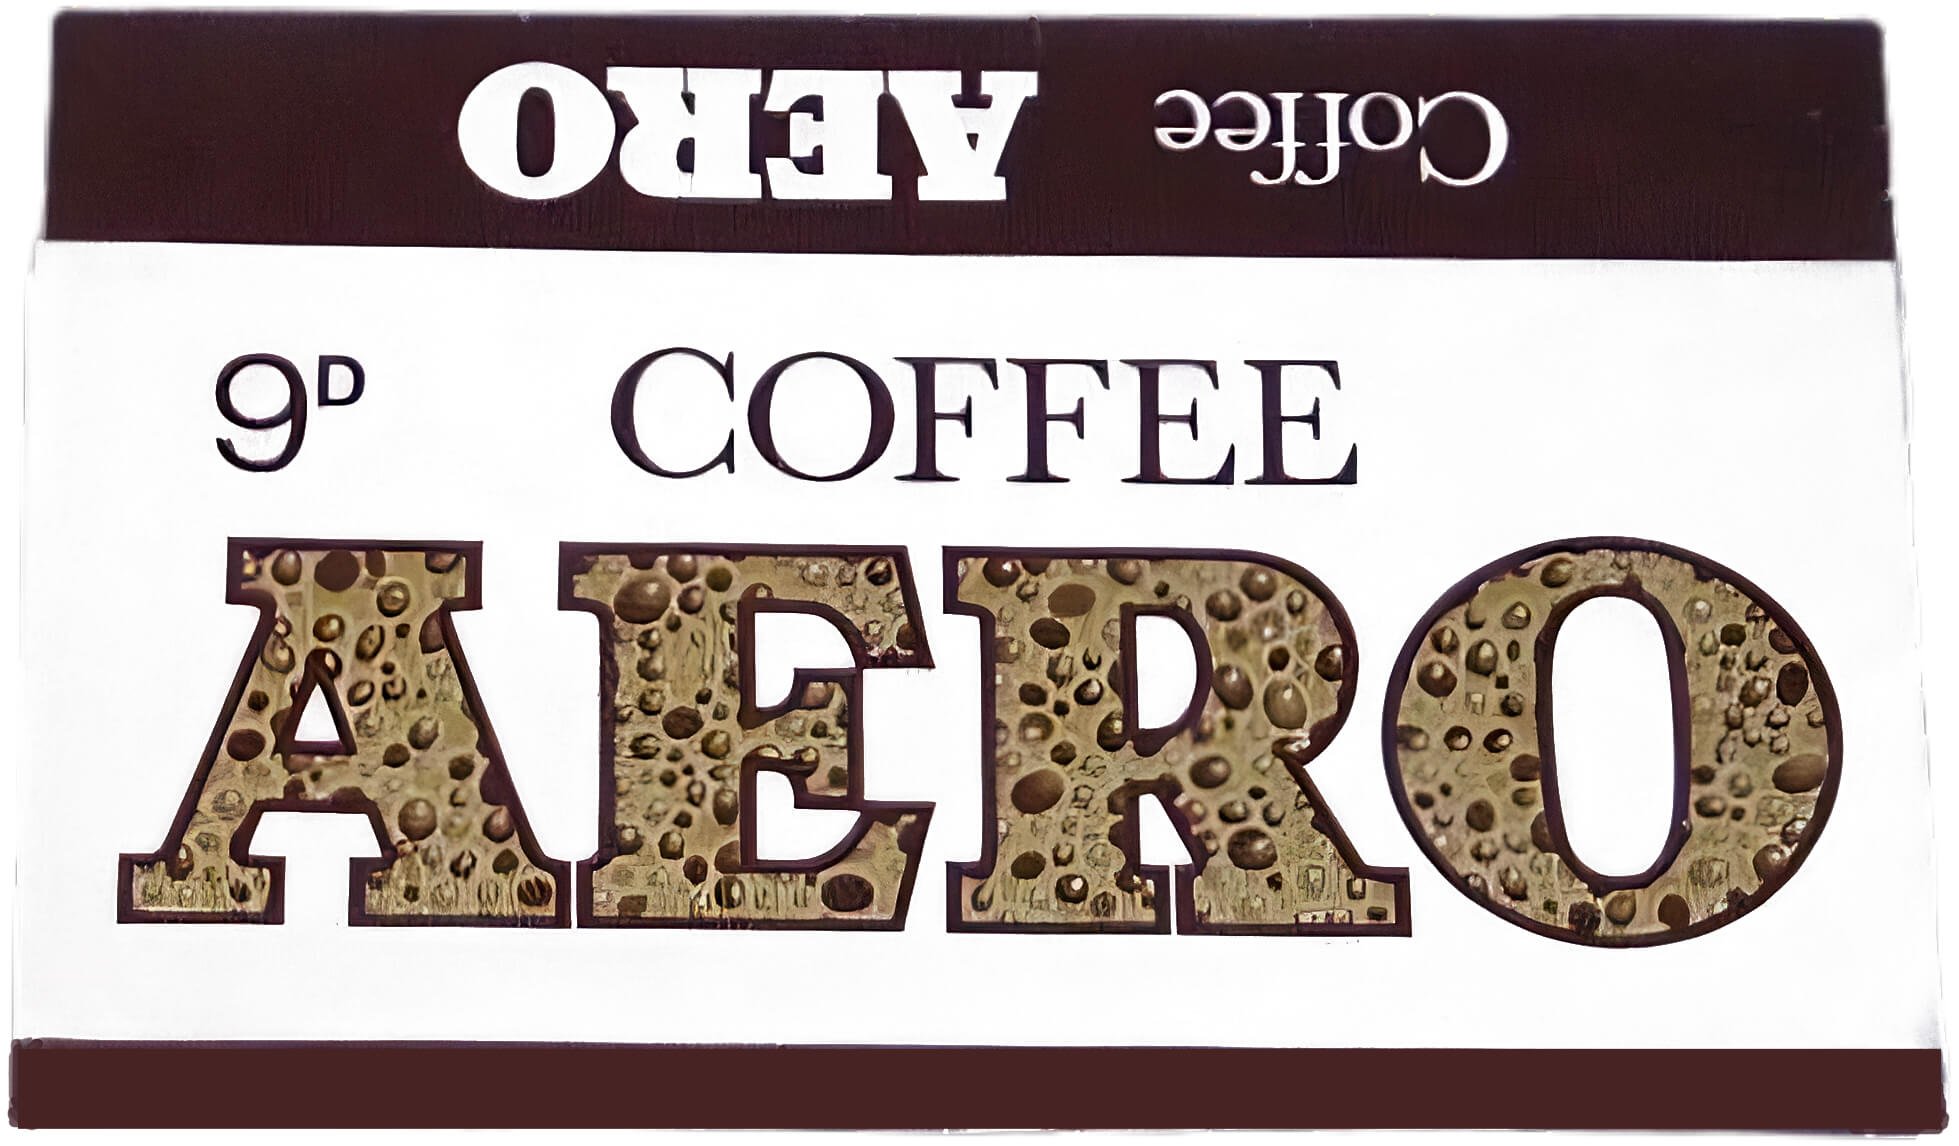 Coffee Aero wrapper (price 9d), white and brown